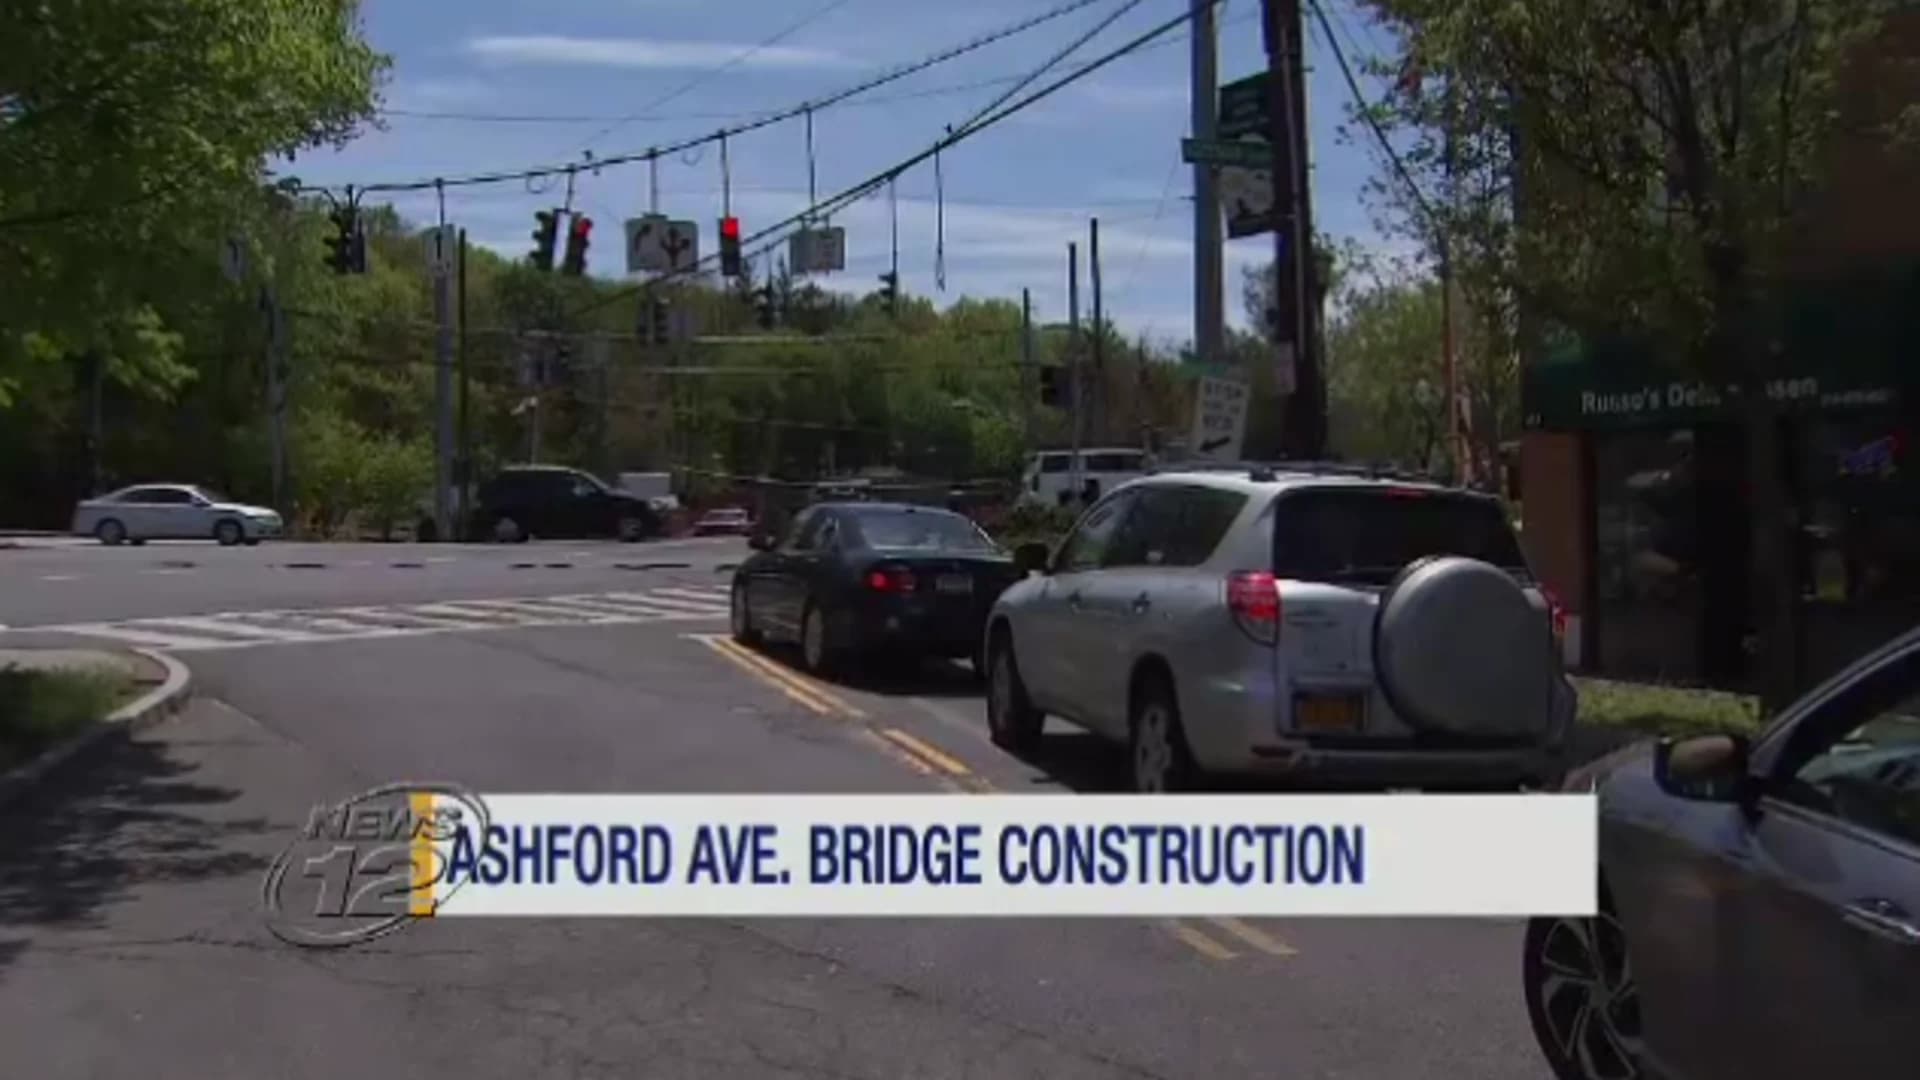 Officials: Ashford Avenue Bridge construction ahead of scheduled